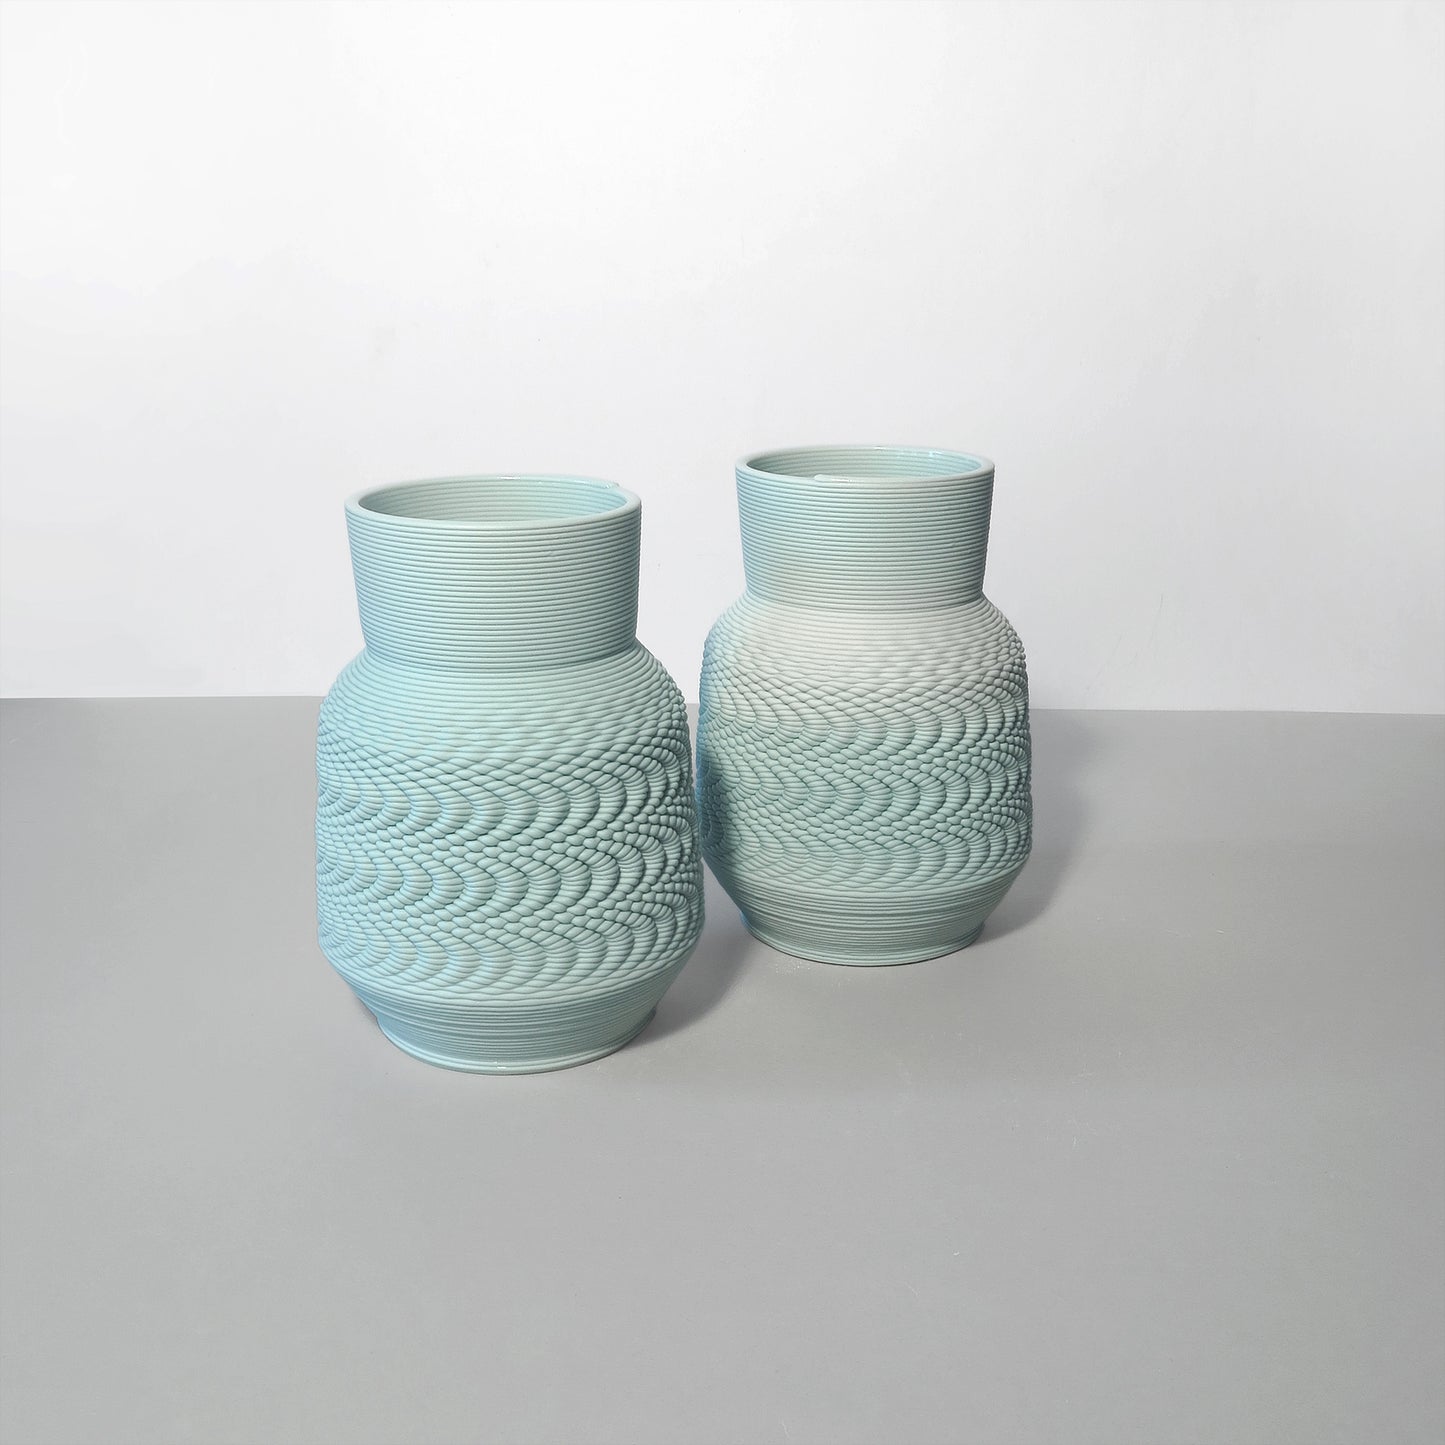 Breeze, Vase No. 1 by Babette Wiezorek